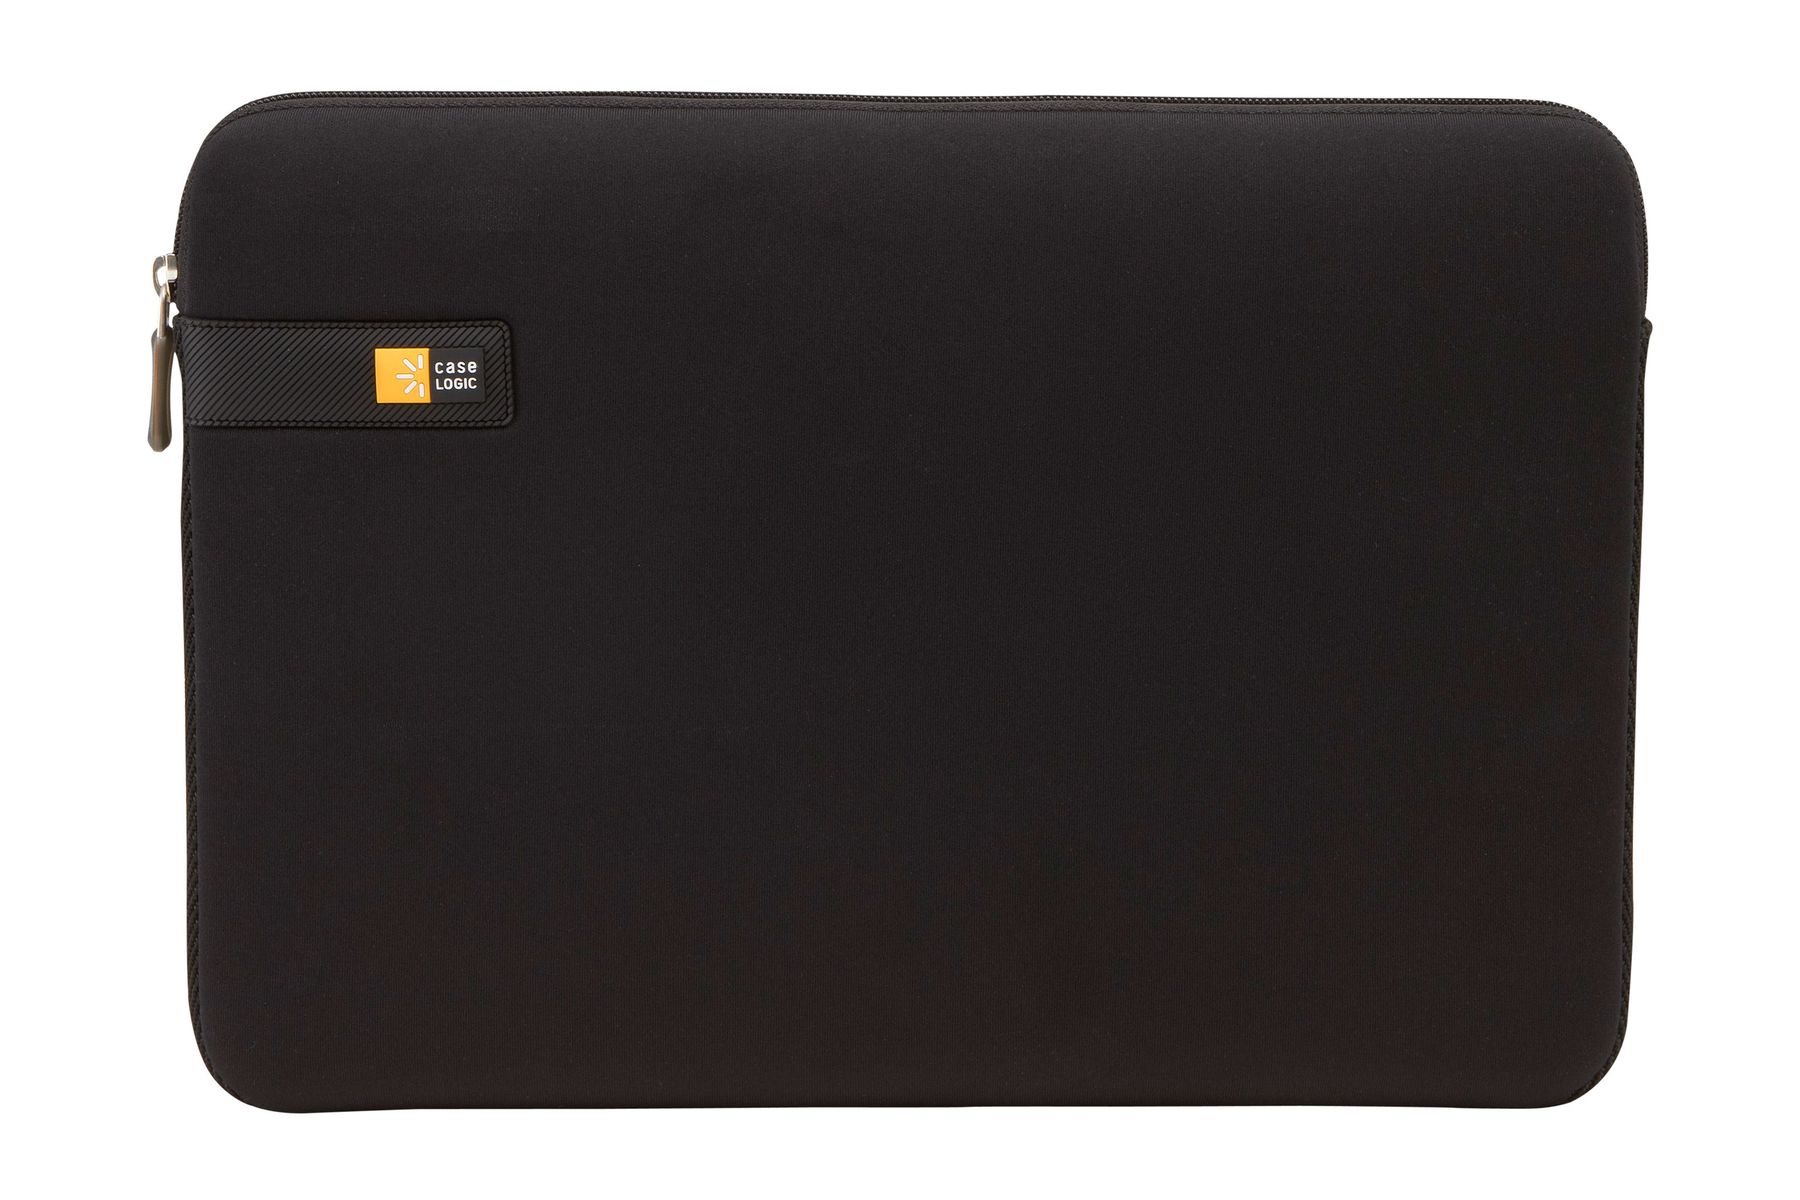 Case Logic 13.3" Laptop and MacBook Sleeve Black - Back